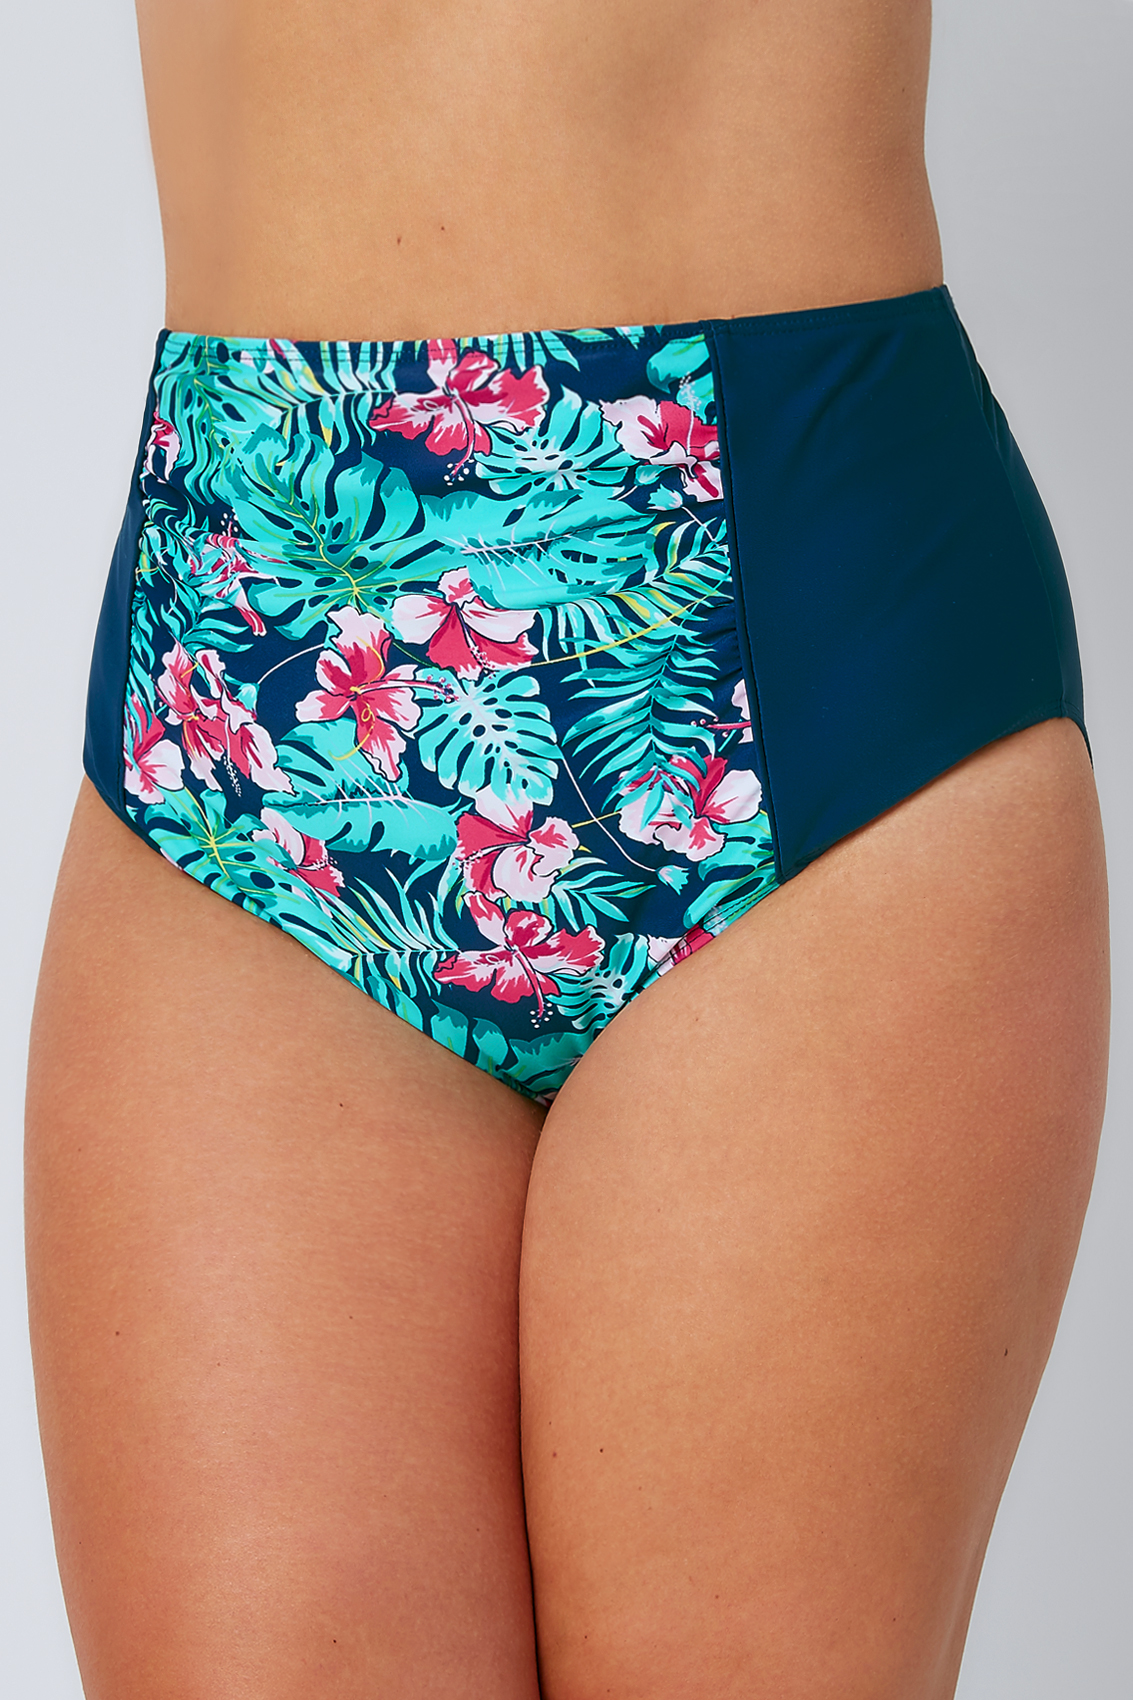 Green & Blue Tropical Orchard Print High Waisted Bikini Brief, Plus size 16 to 321133 x 1700